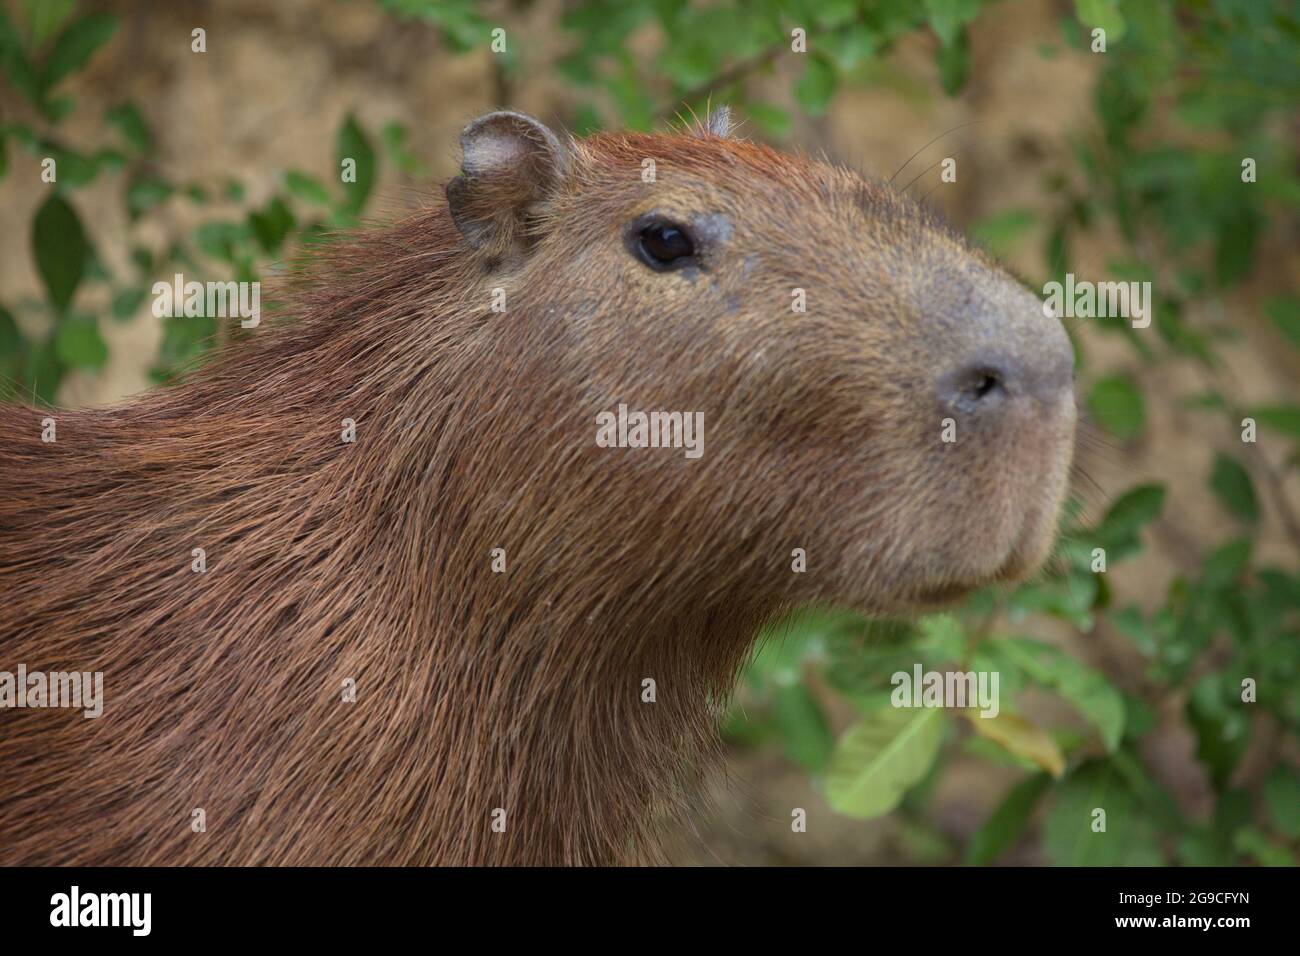 Closeup side on portrait of Capybara (Hydrochoerus hydrochaeris) head looking straight at camera Pampas del Yacuma, Bolivia. Stock Photo